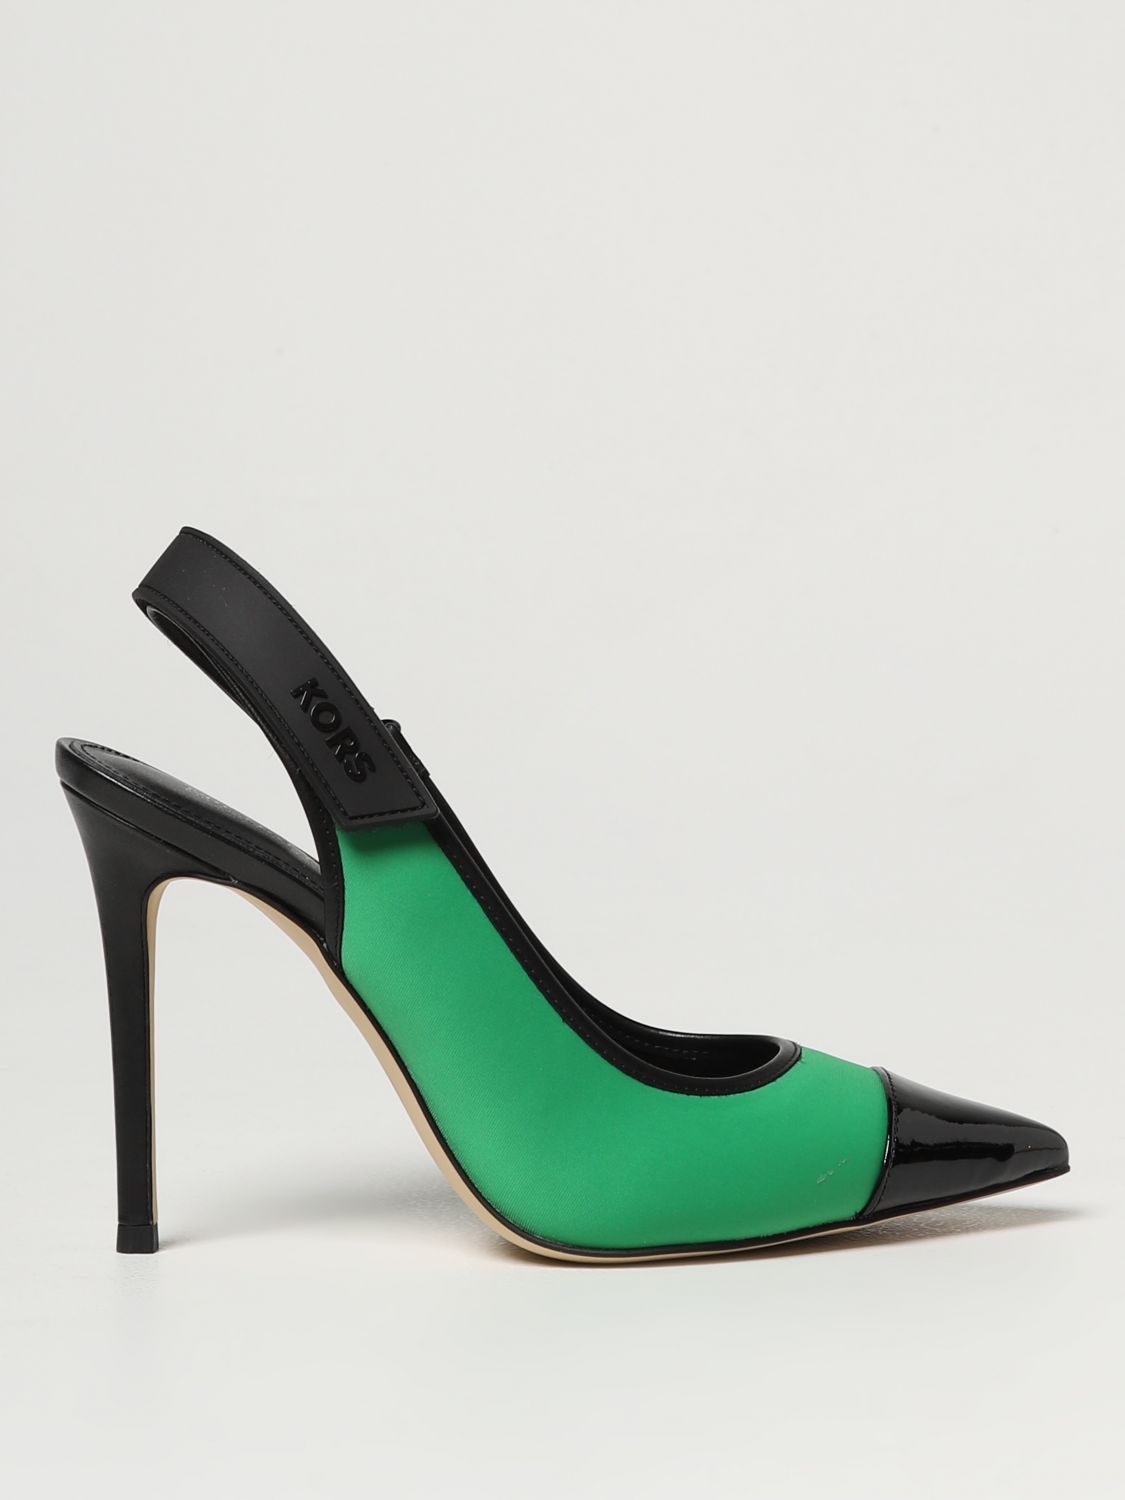 MICHAEL KORS: high heel shoes for woman - Green | Michael Kors high ...